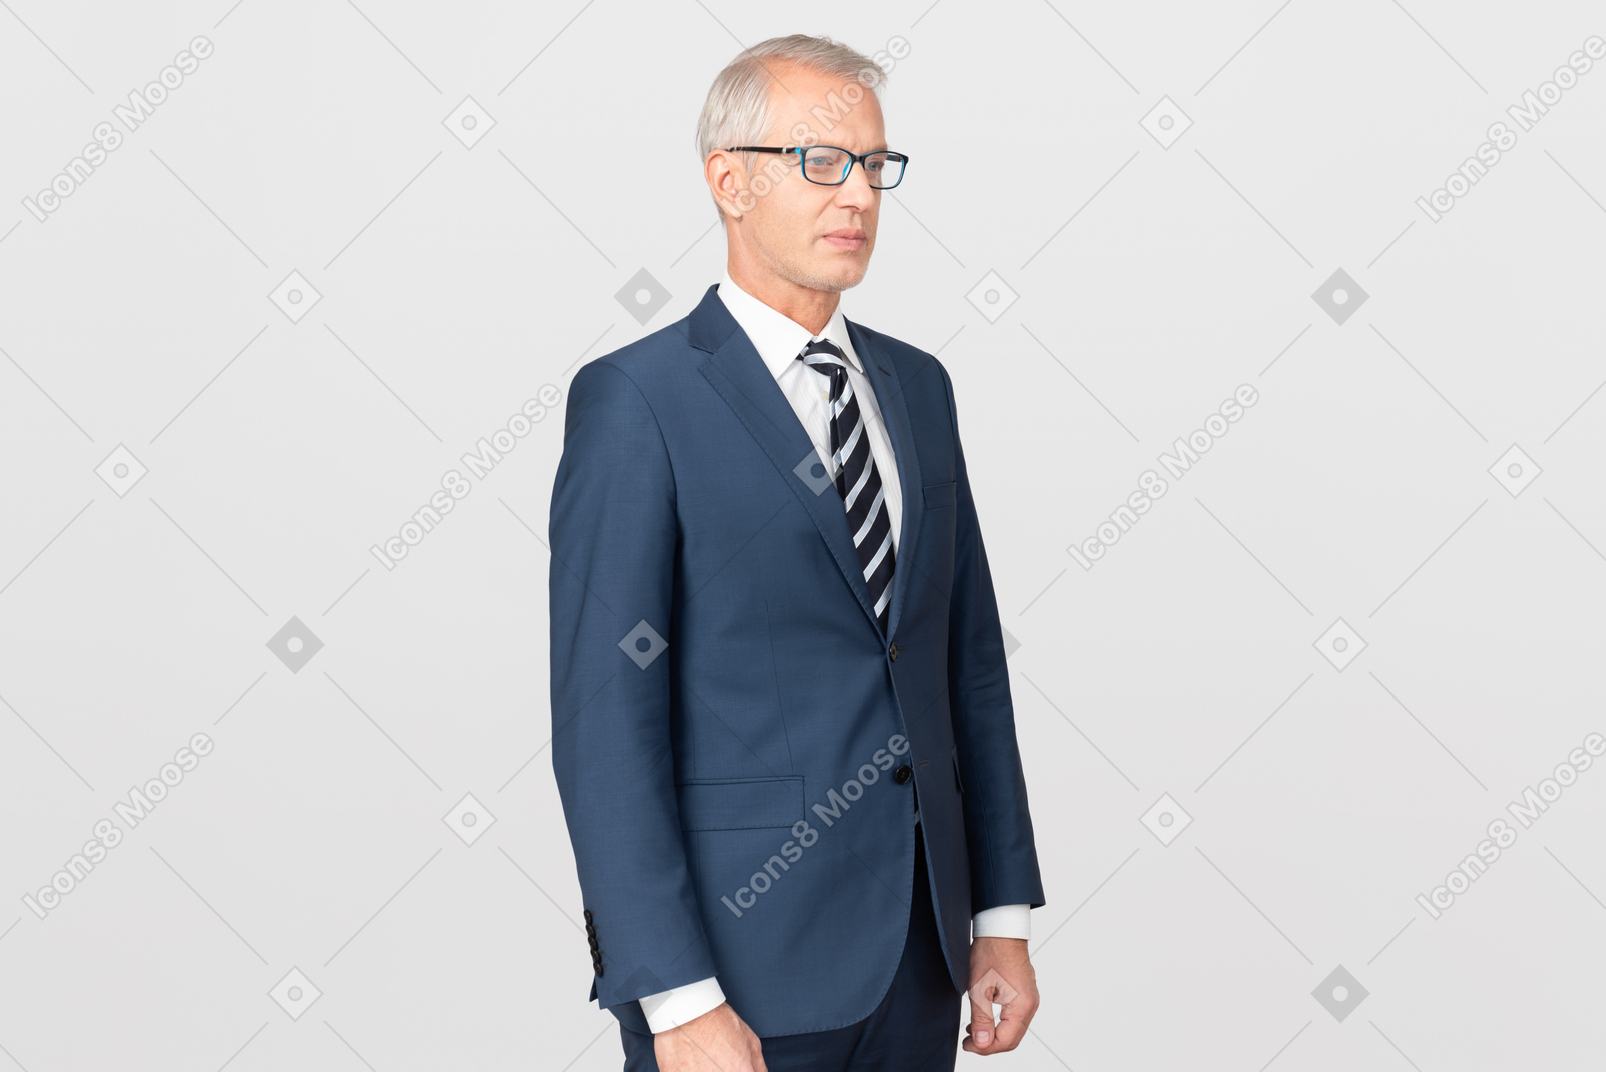 Middle aged man standing half sideways